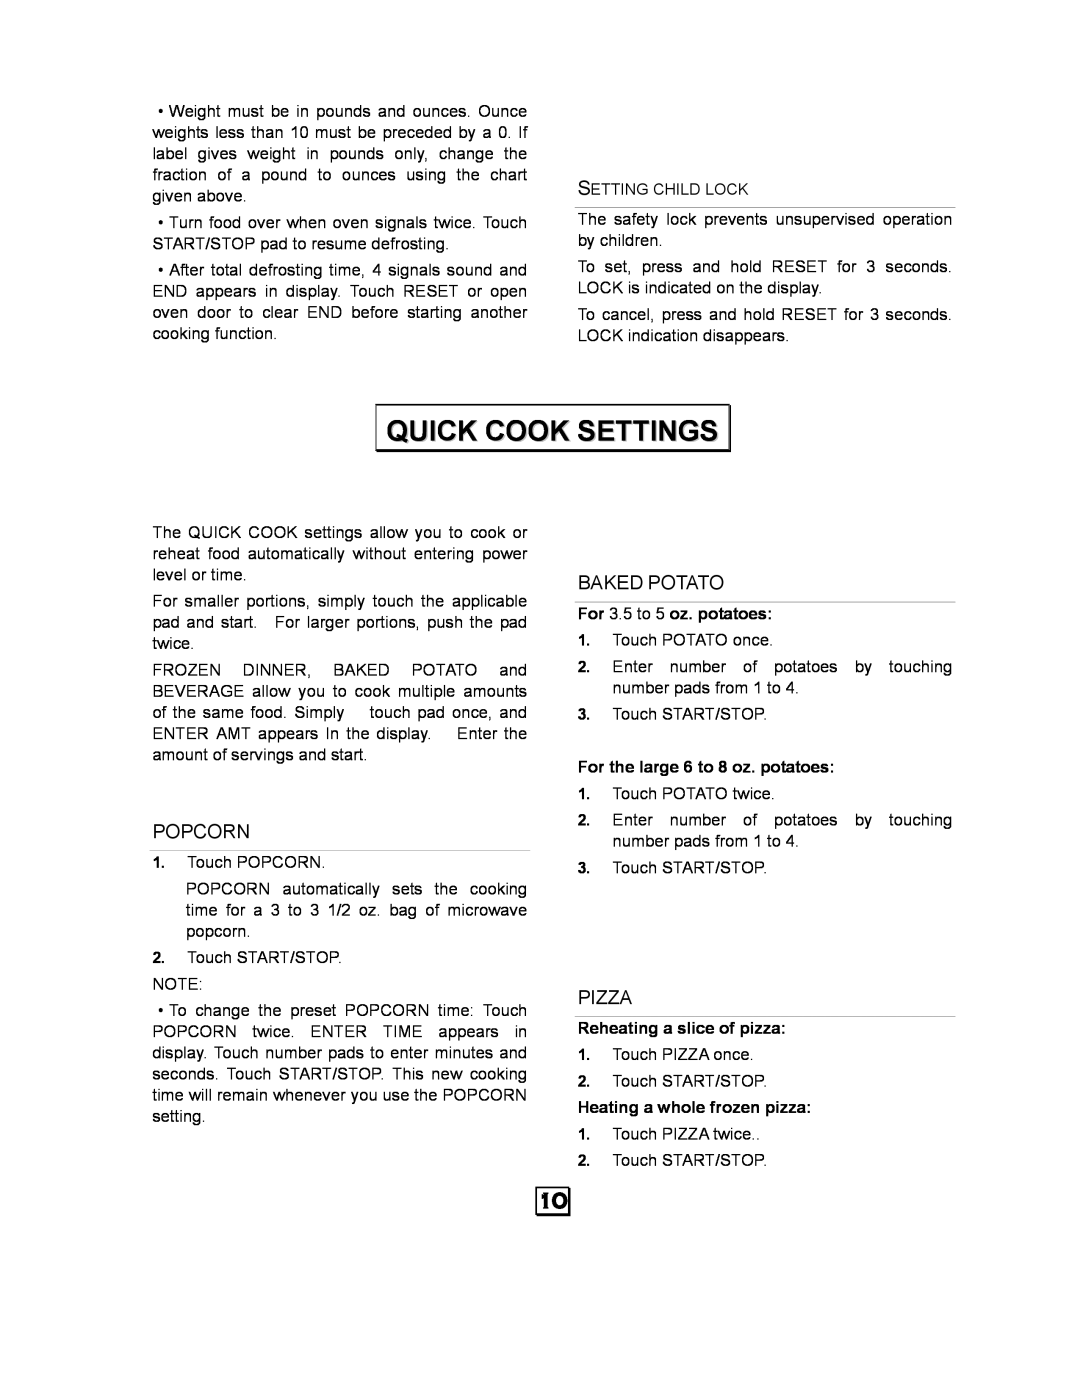 RCA RMW968 manual Quick Cook Settings, Popcorn, Baked Potato, Pizza 